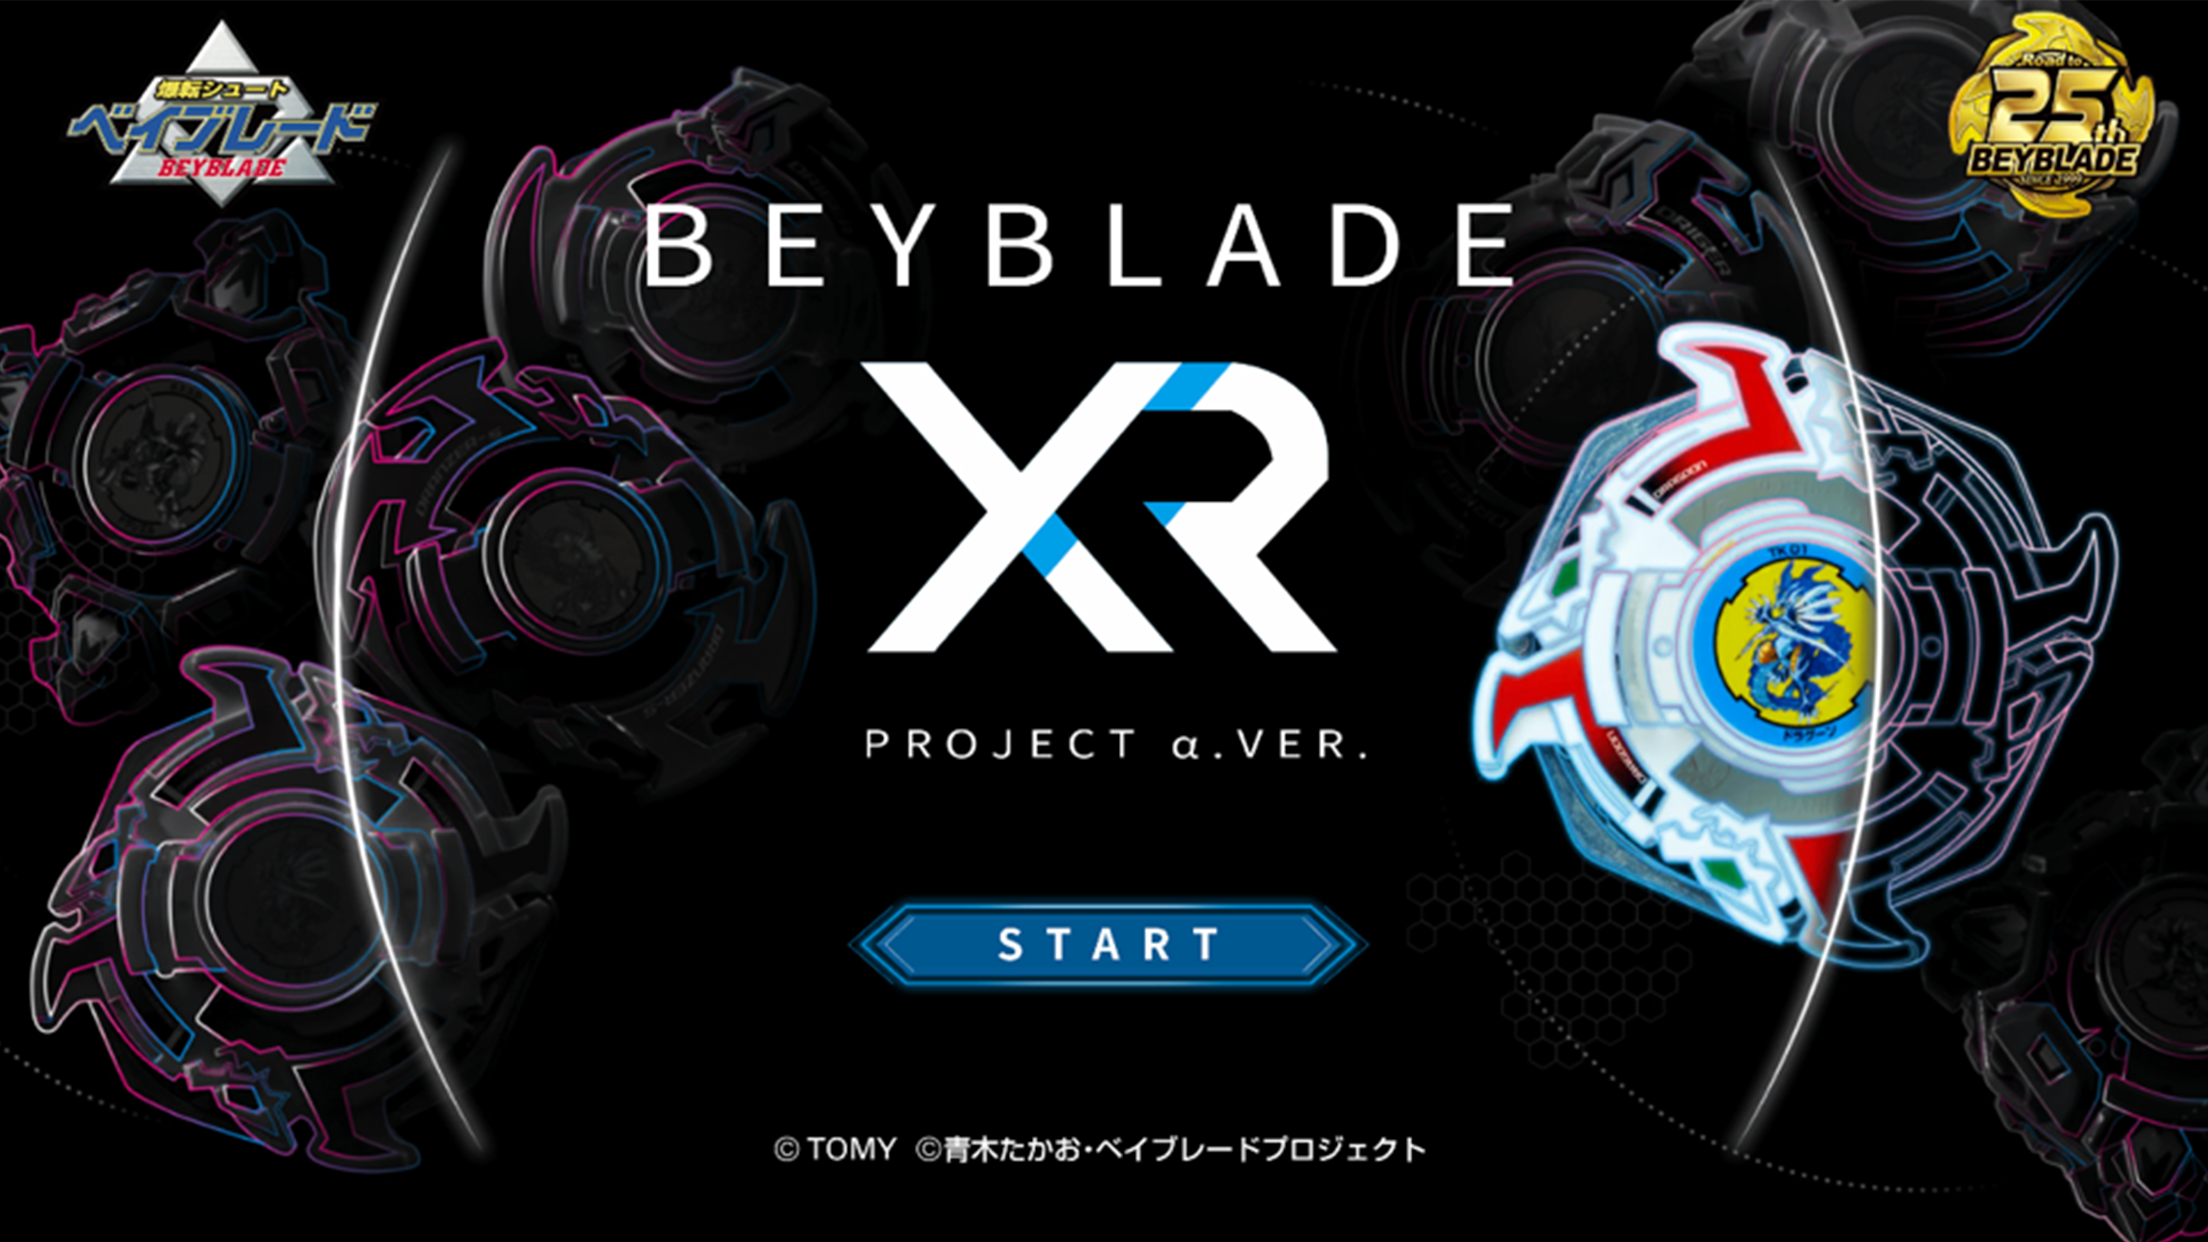 Screenshot of BEYBLADE XR Project